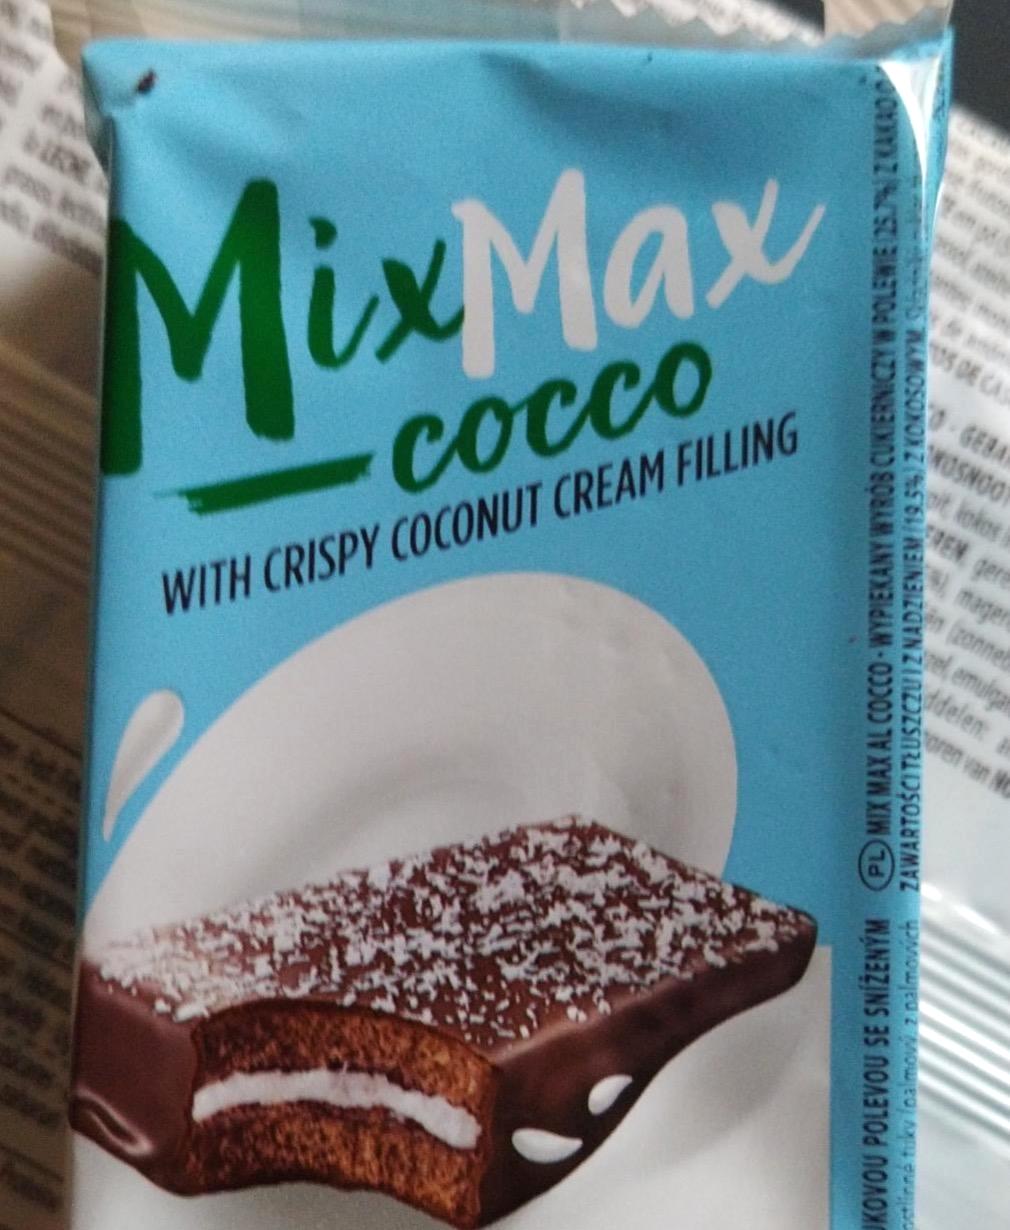 Képek - Mix Max cocco